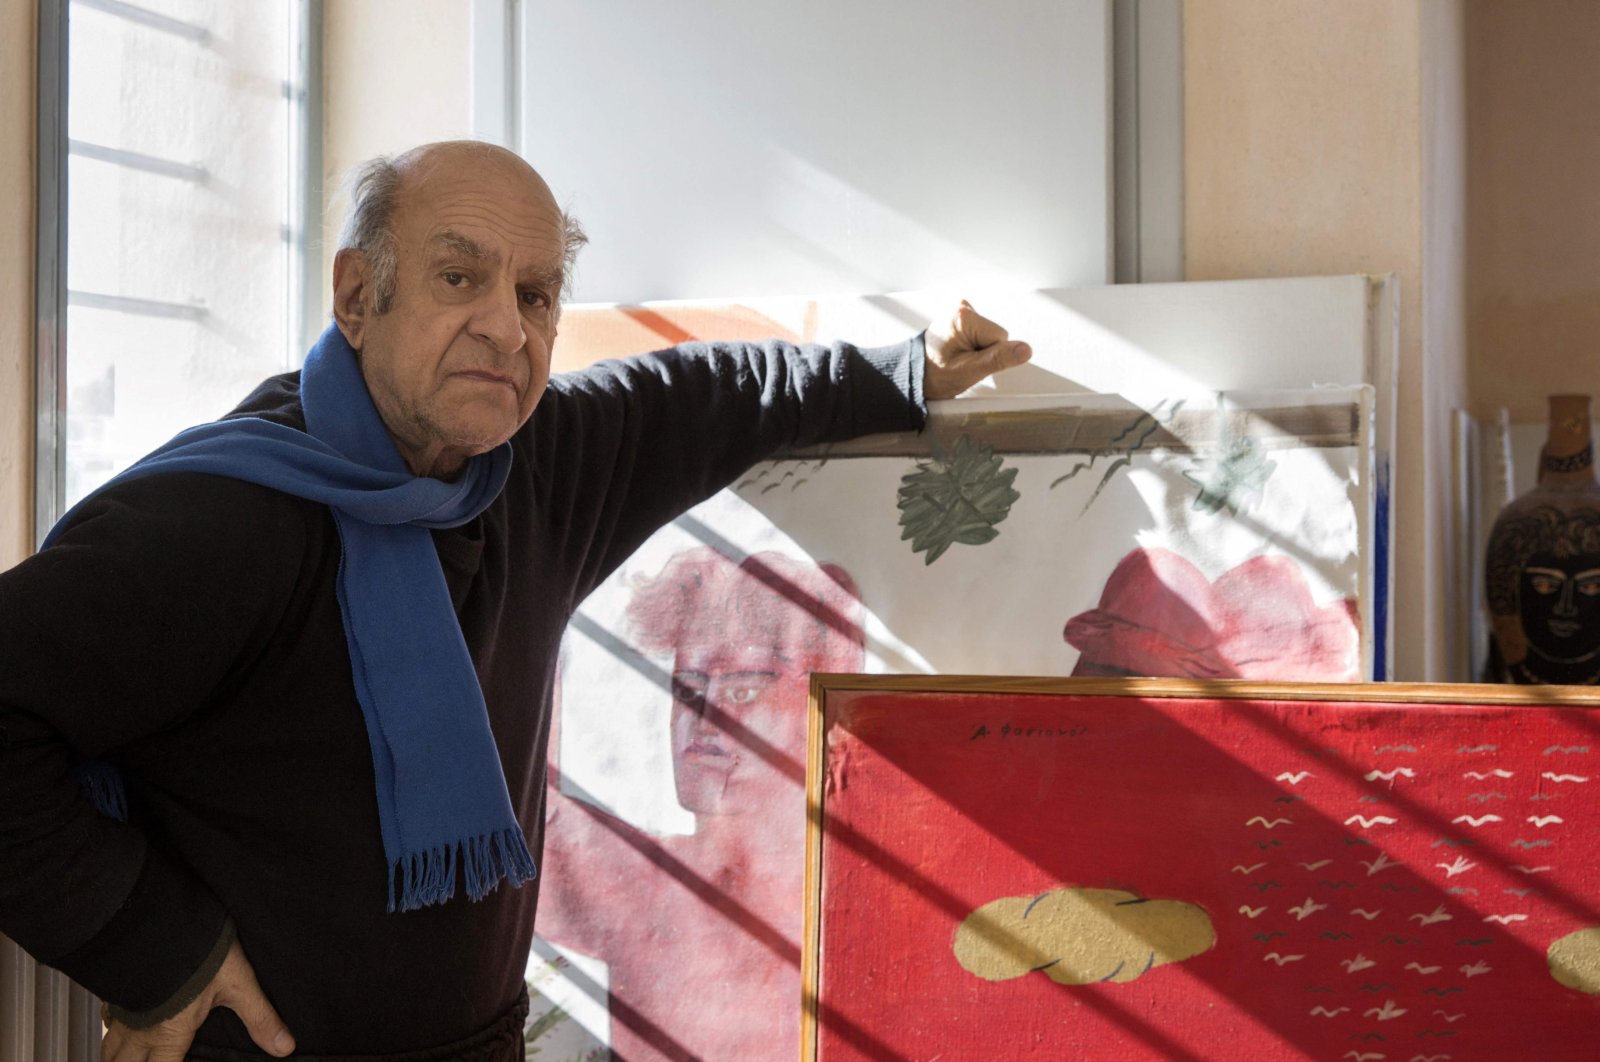 Greek contemporary artist Alekos Fassianos poses with his artworks in his house in Athens, Greece, Jan. 18, 2018. (Louisa Nikolaidou via AFP)